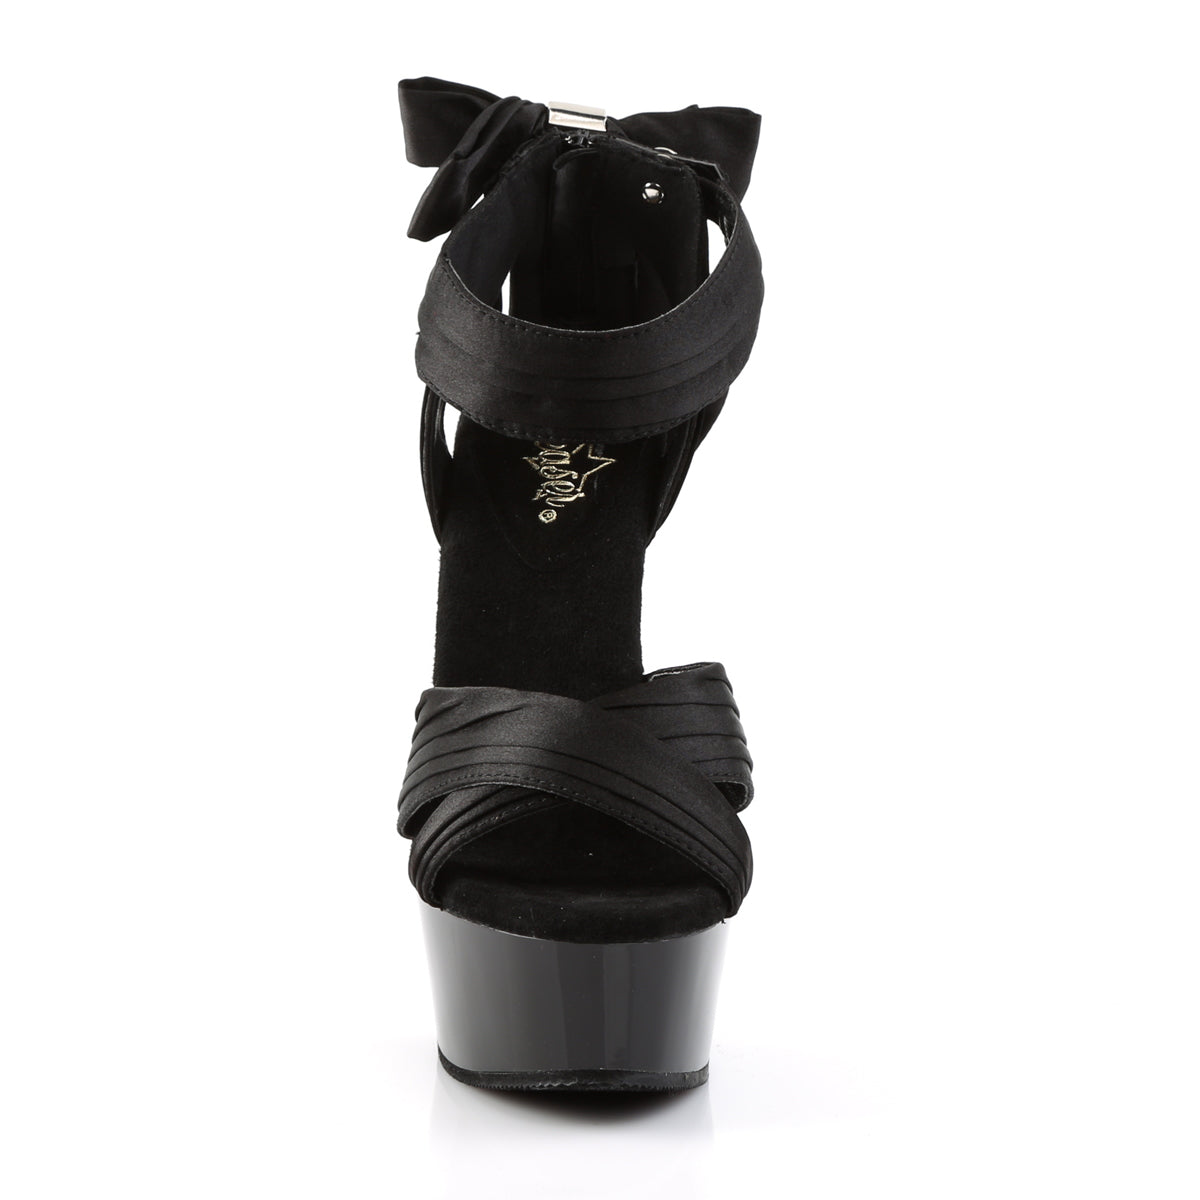 DELIGHT-668 6" Heel Black Satin Pole Dancing Platforms-Pleaser- Sexy Shoes Alternative Footwear